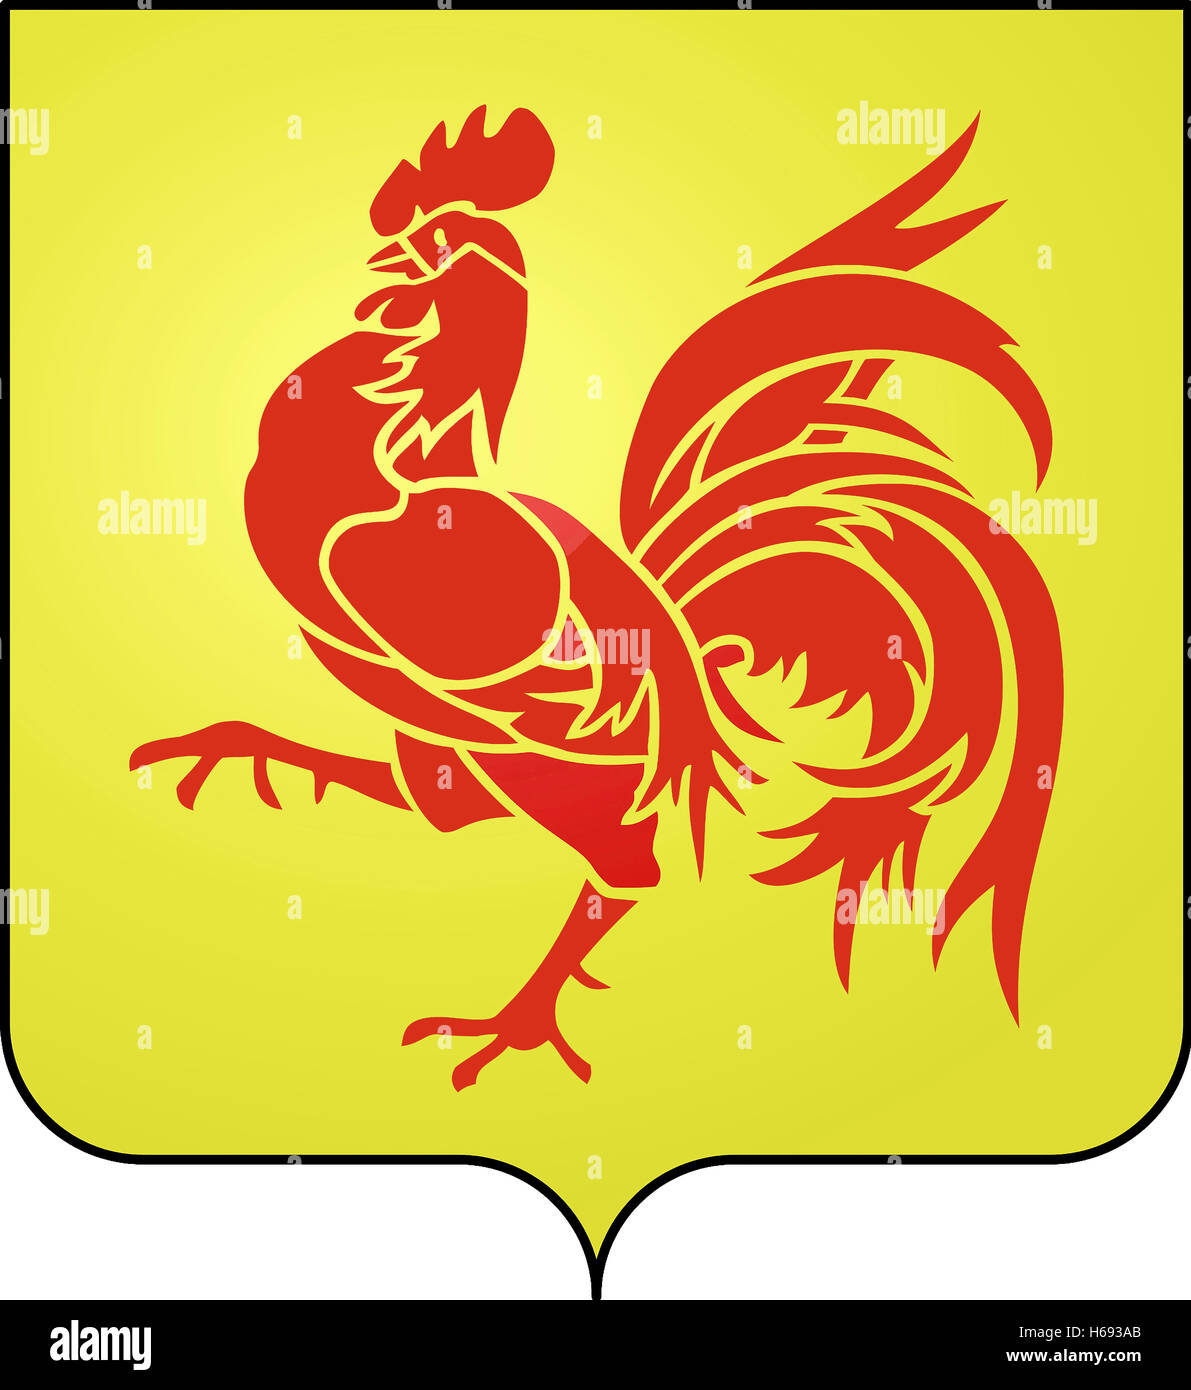 Coat of arms of the Belgian region of Wallonia in Belgium. Stock Photo